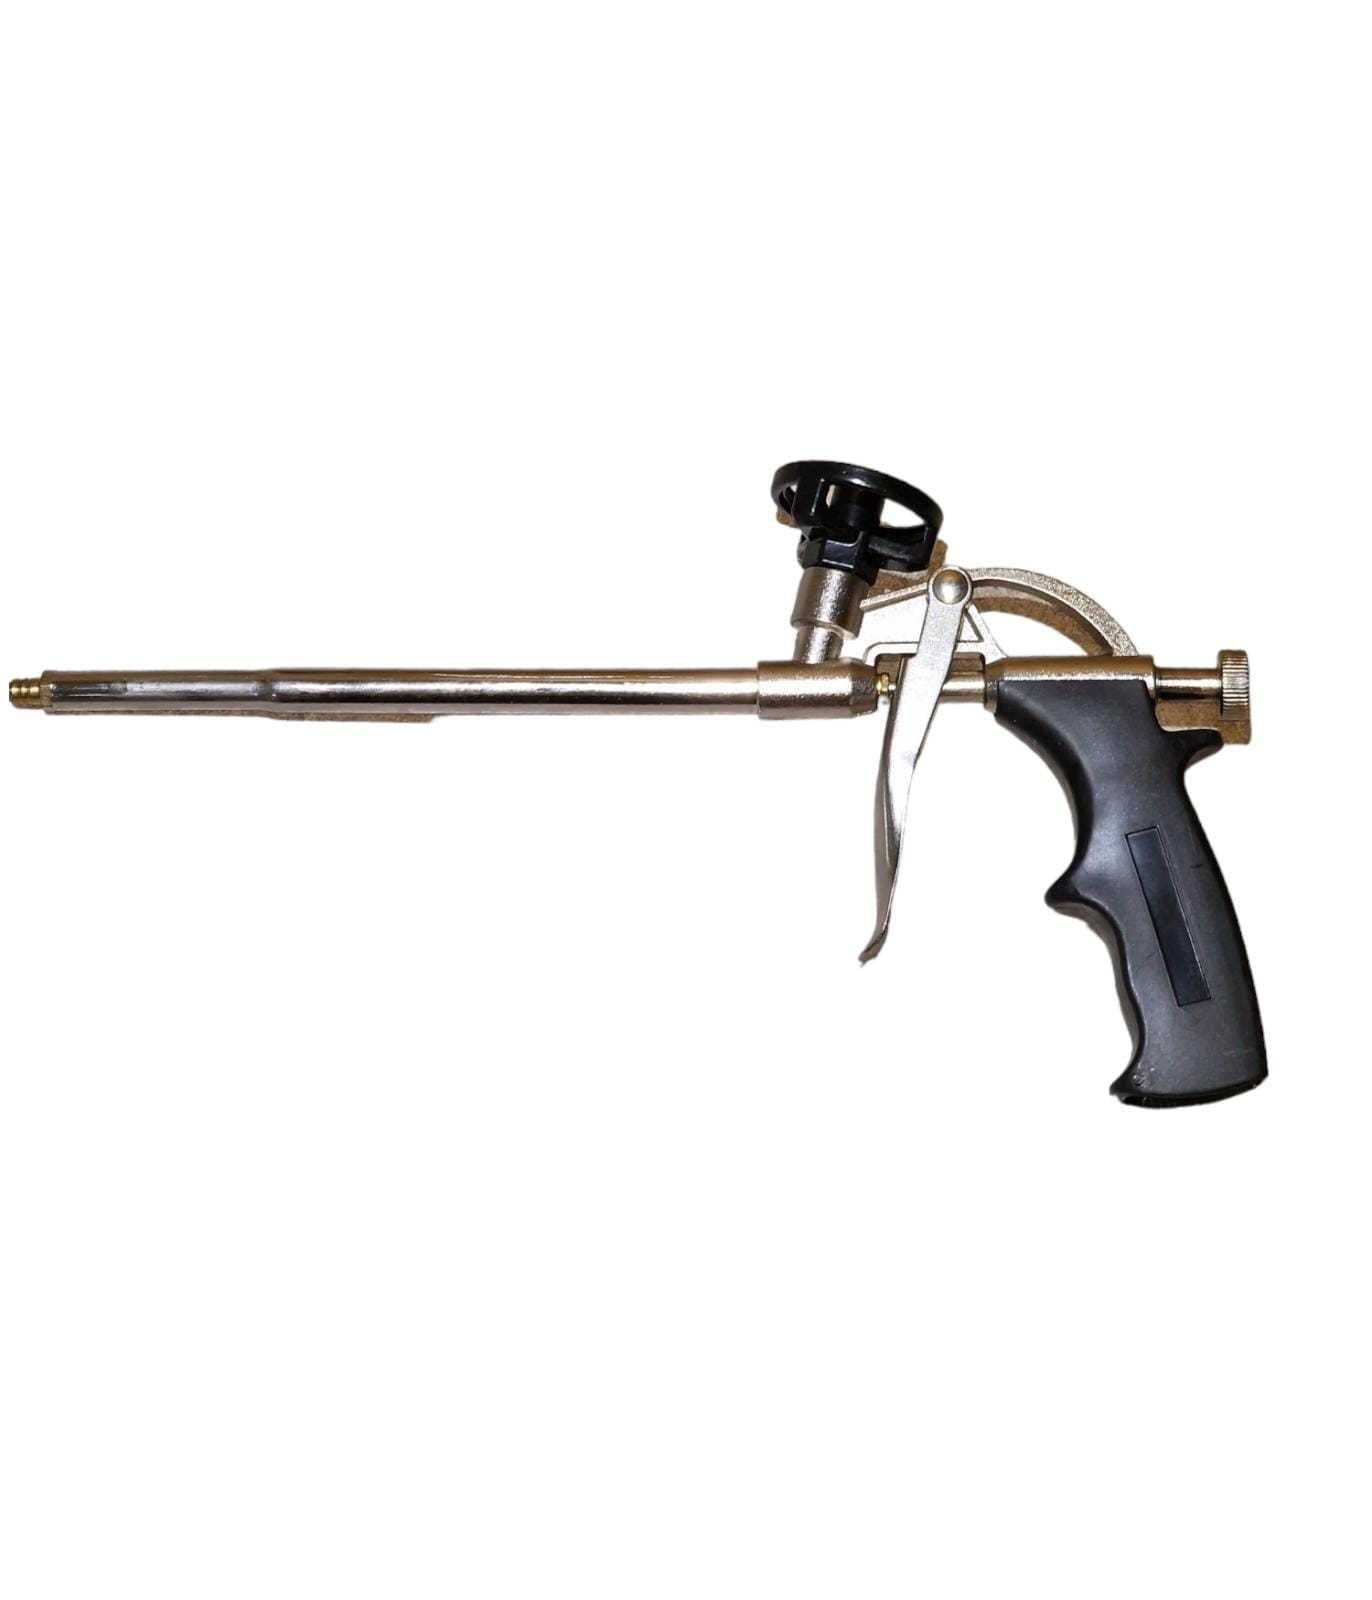 Pistol aplicat spuma (metal) – ROTOR – 12745